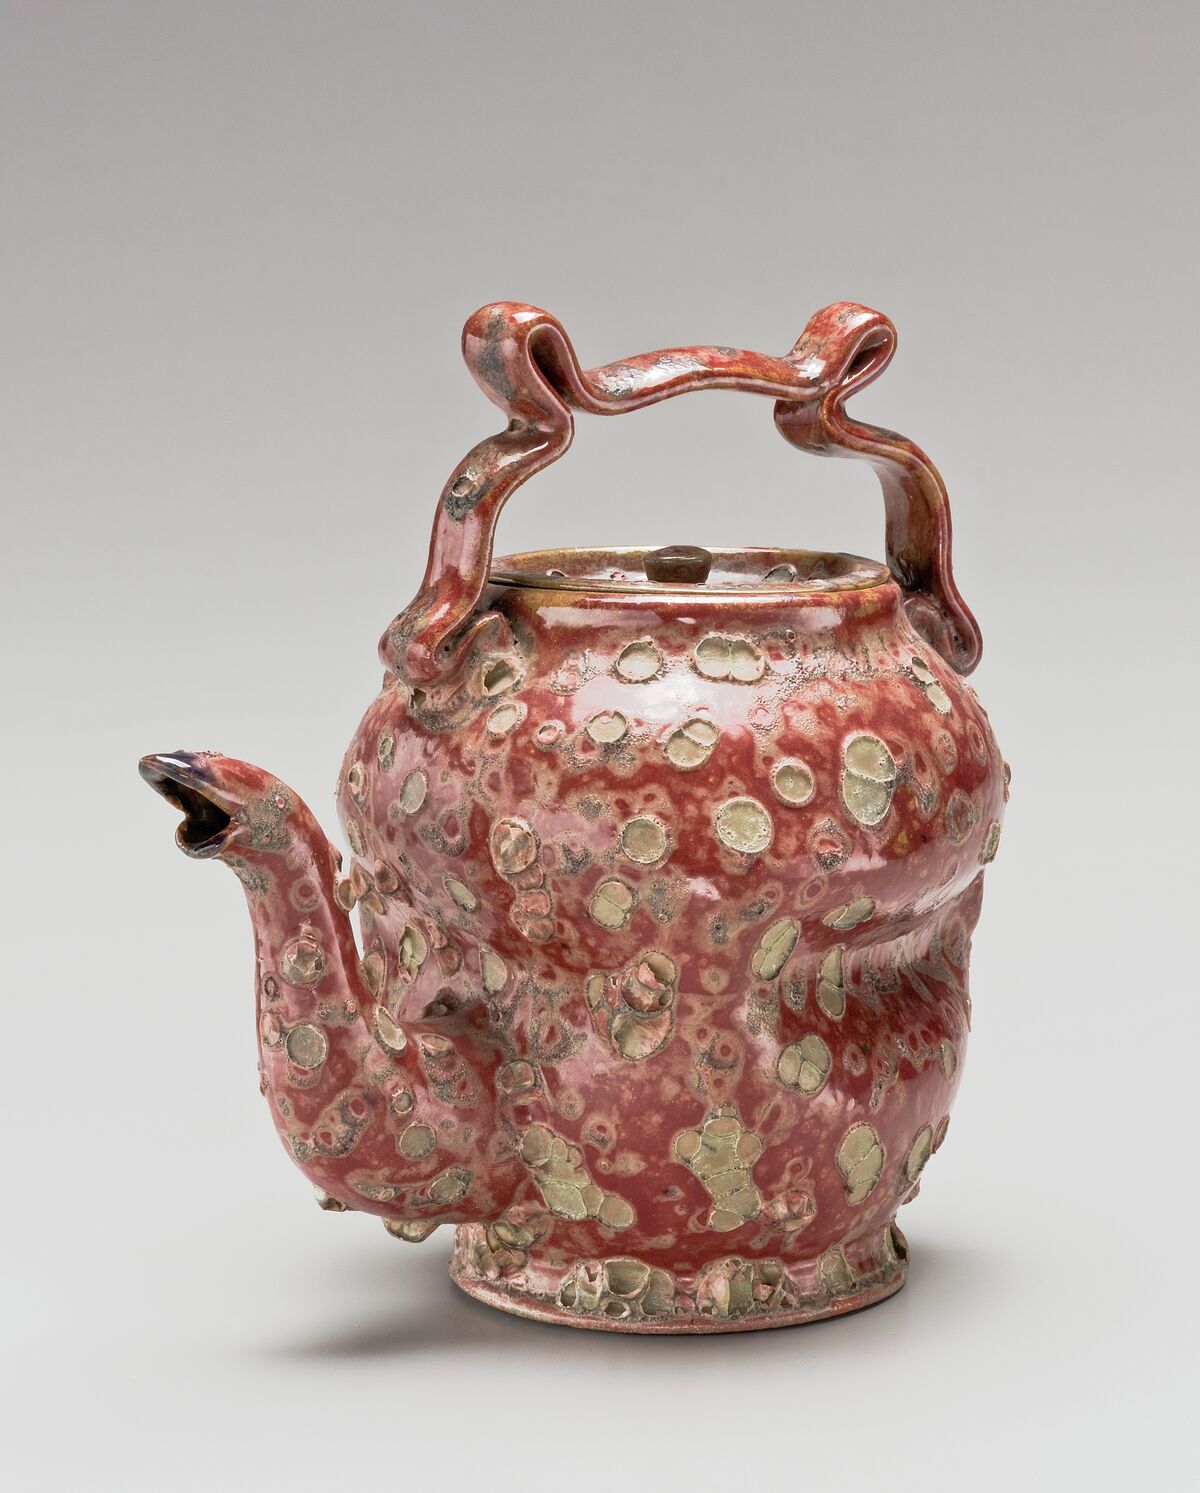 George E. Ohr, Teapot, 1897–1900. Courtesy of the Metropolitan Museum of Art.